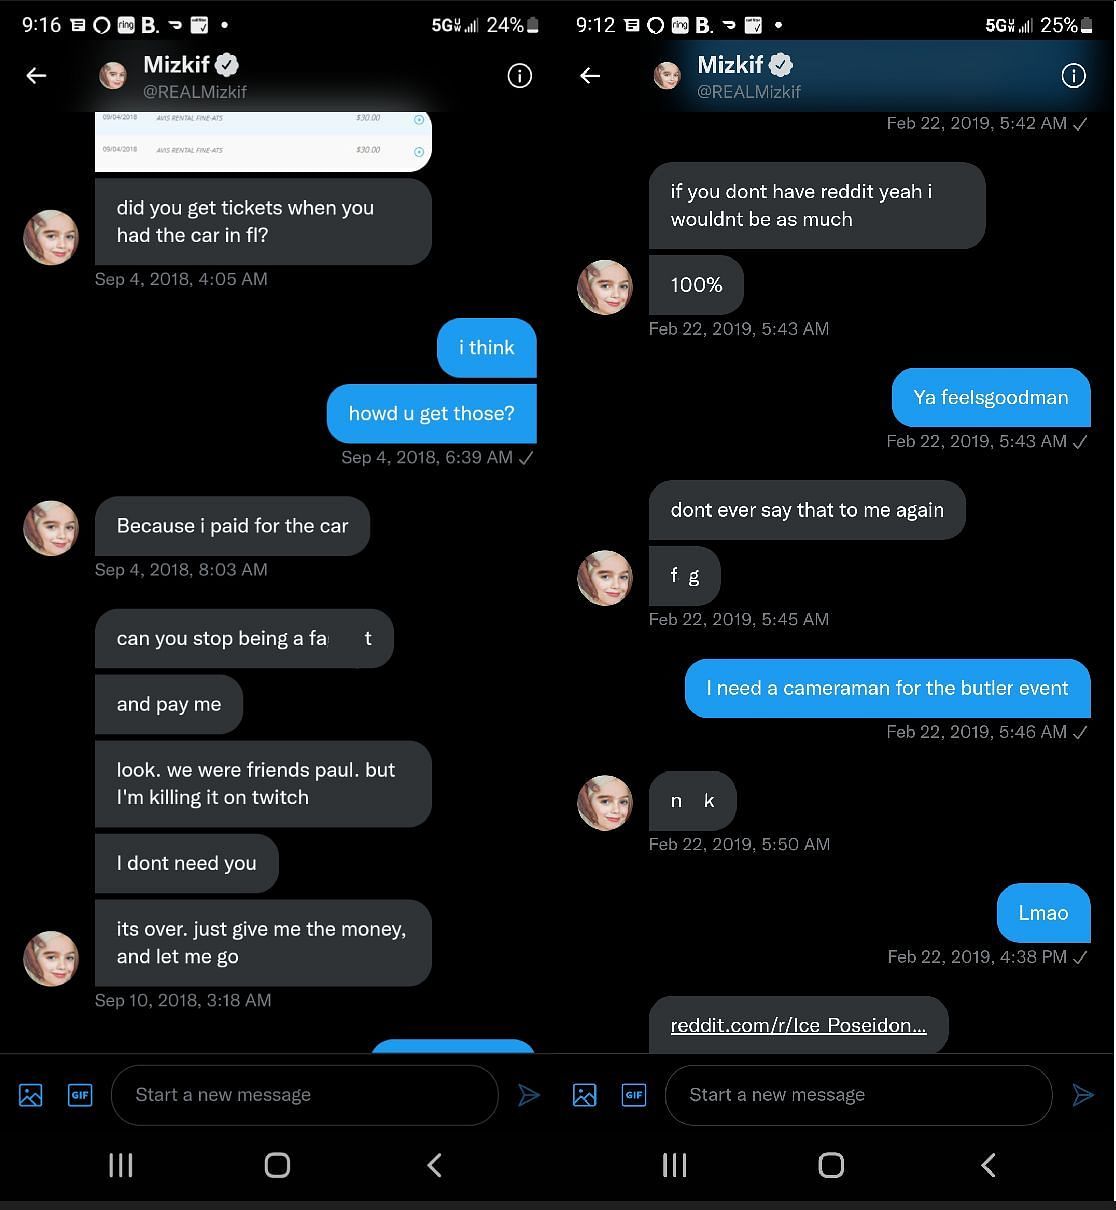 Ice Poseidon leaks old DM conversation featuring Mizkif 2/2 (Images via Twitter)